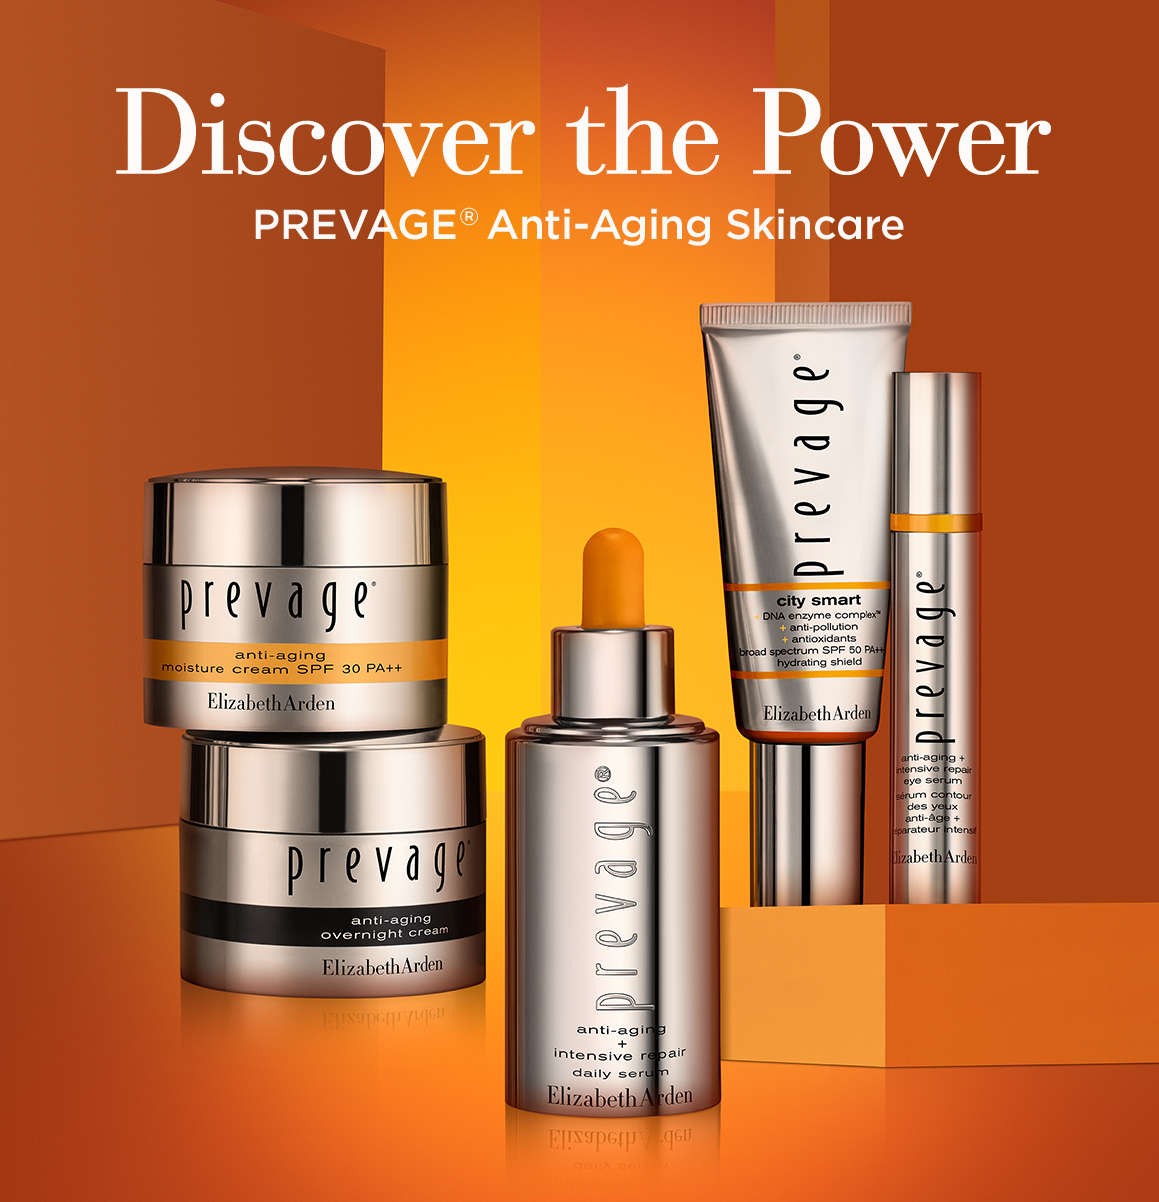 PREVAGE? Anti-Aging Skincare